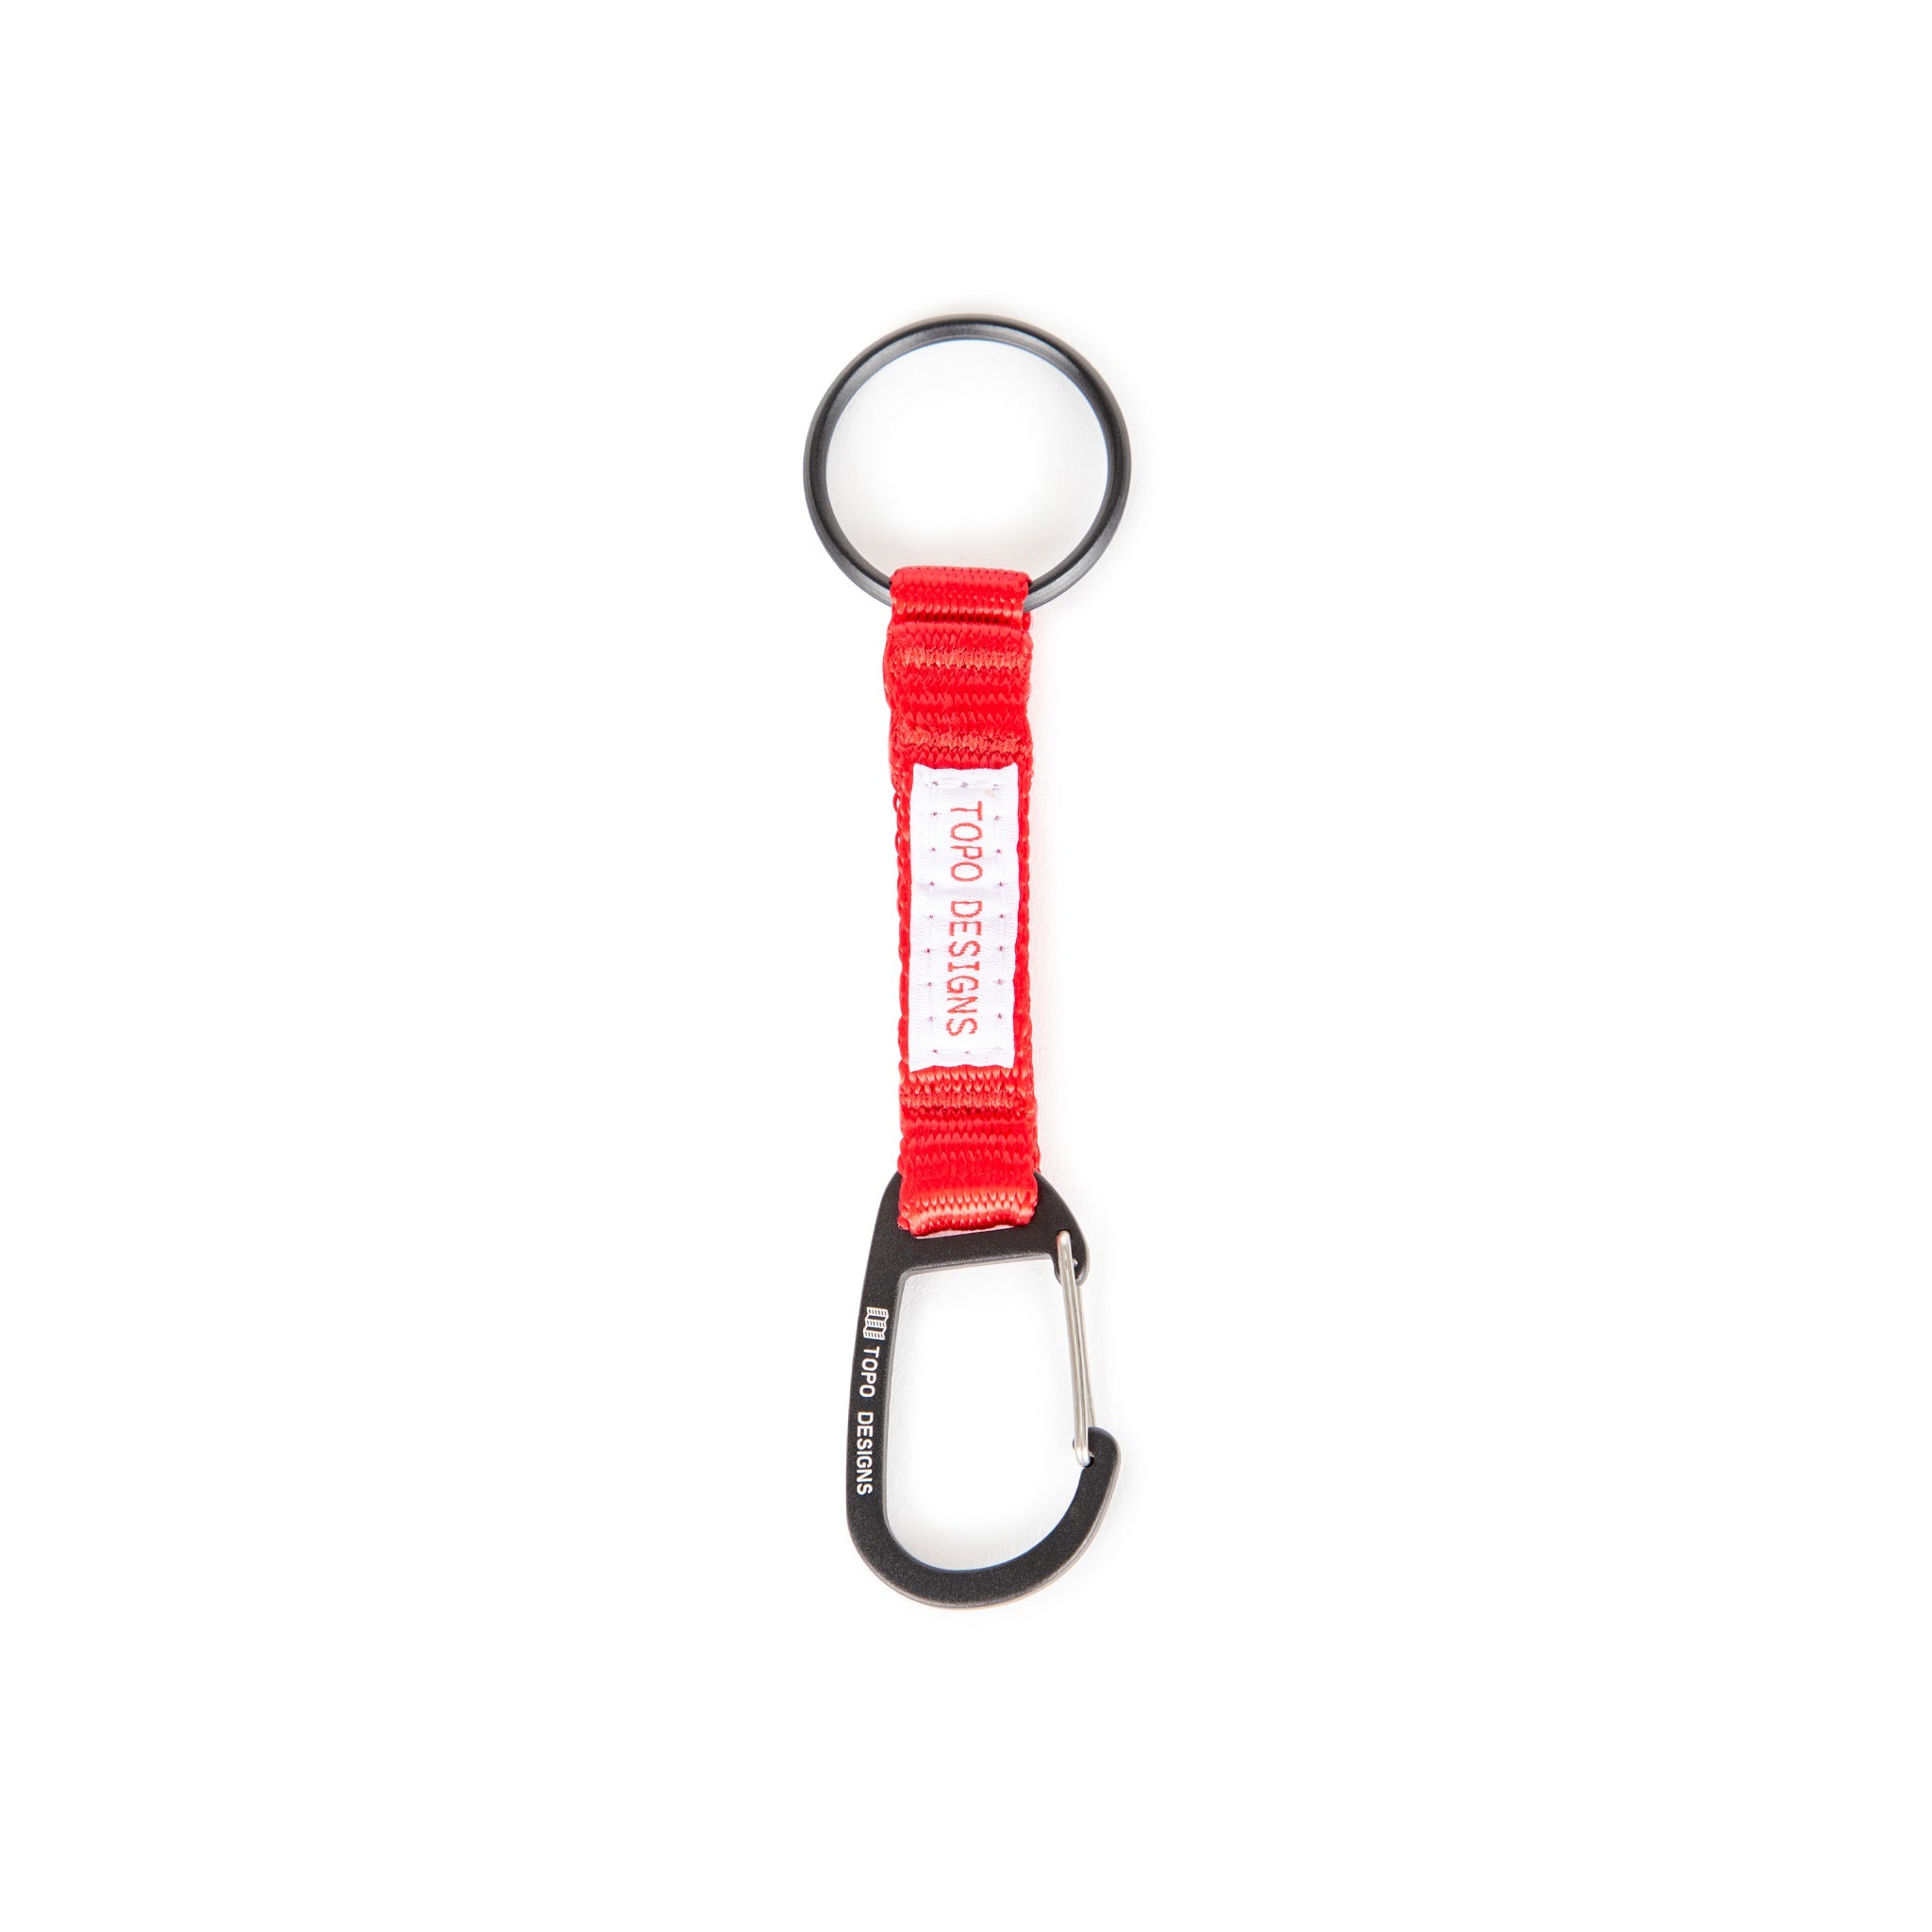 Topo Designs Key Clip carabiner keychain in "Red".